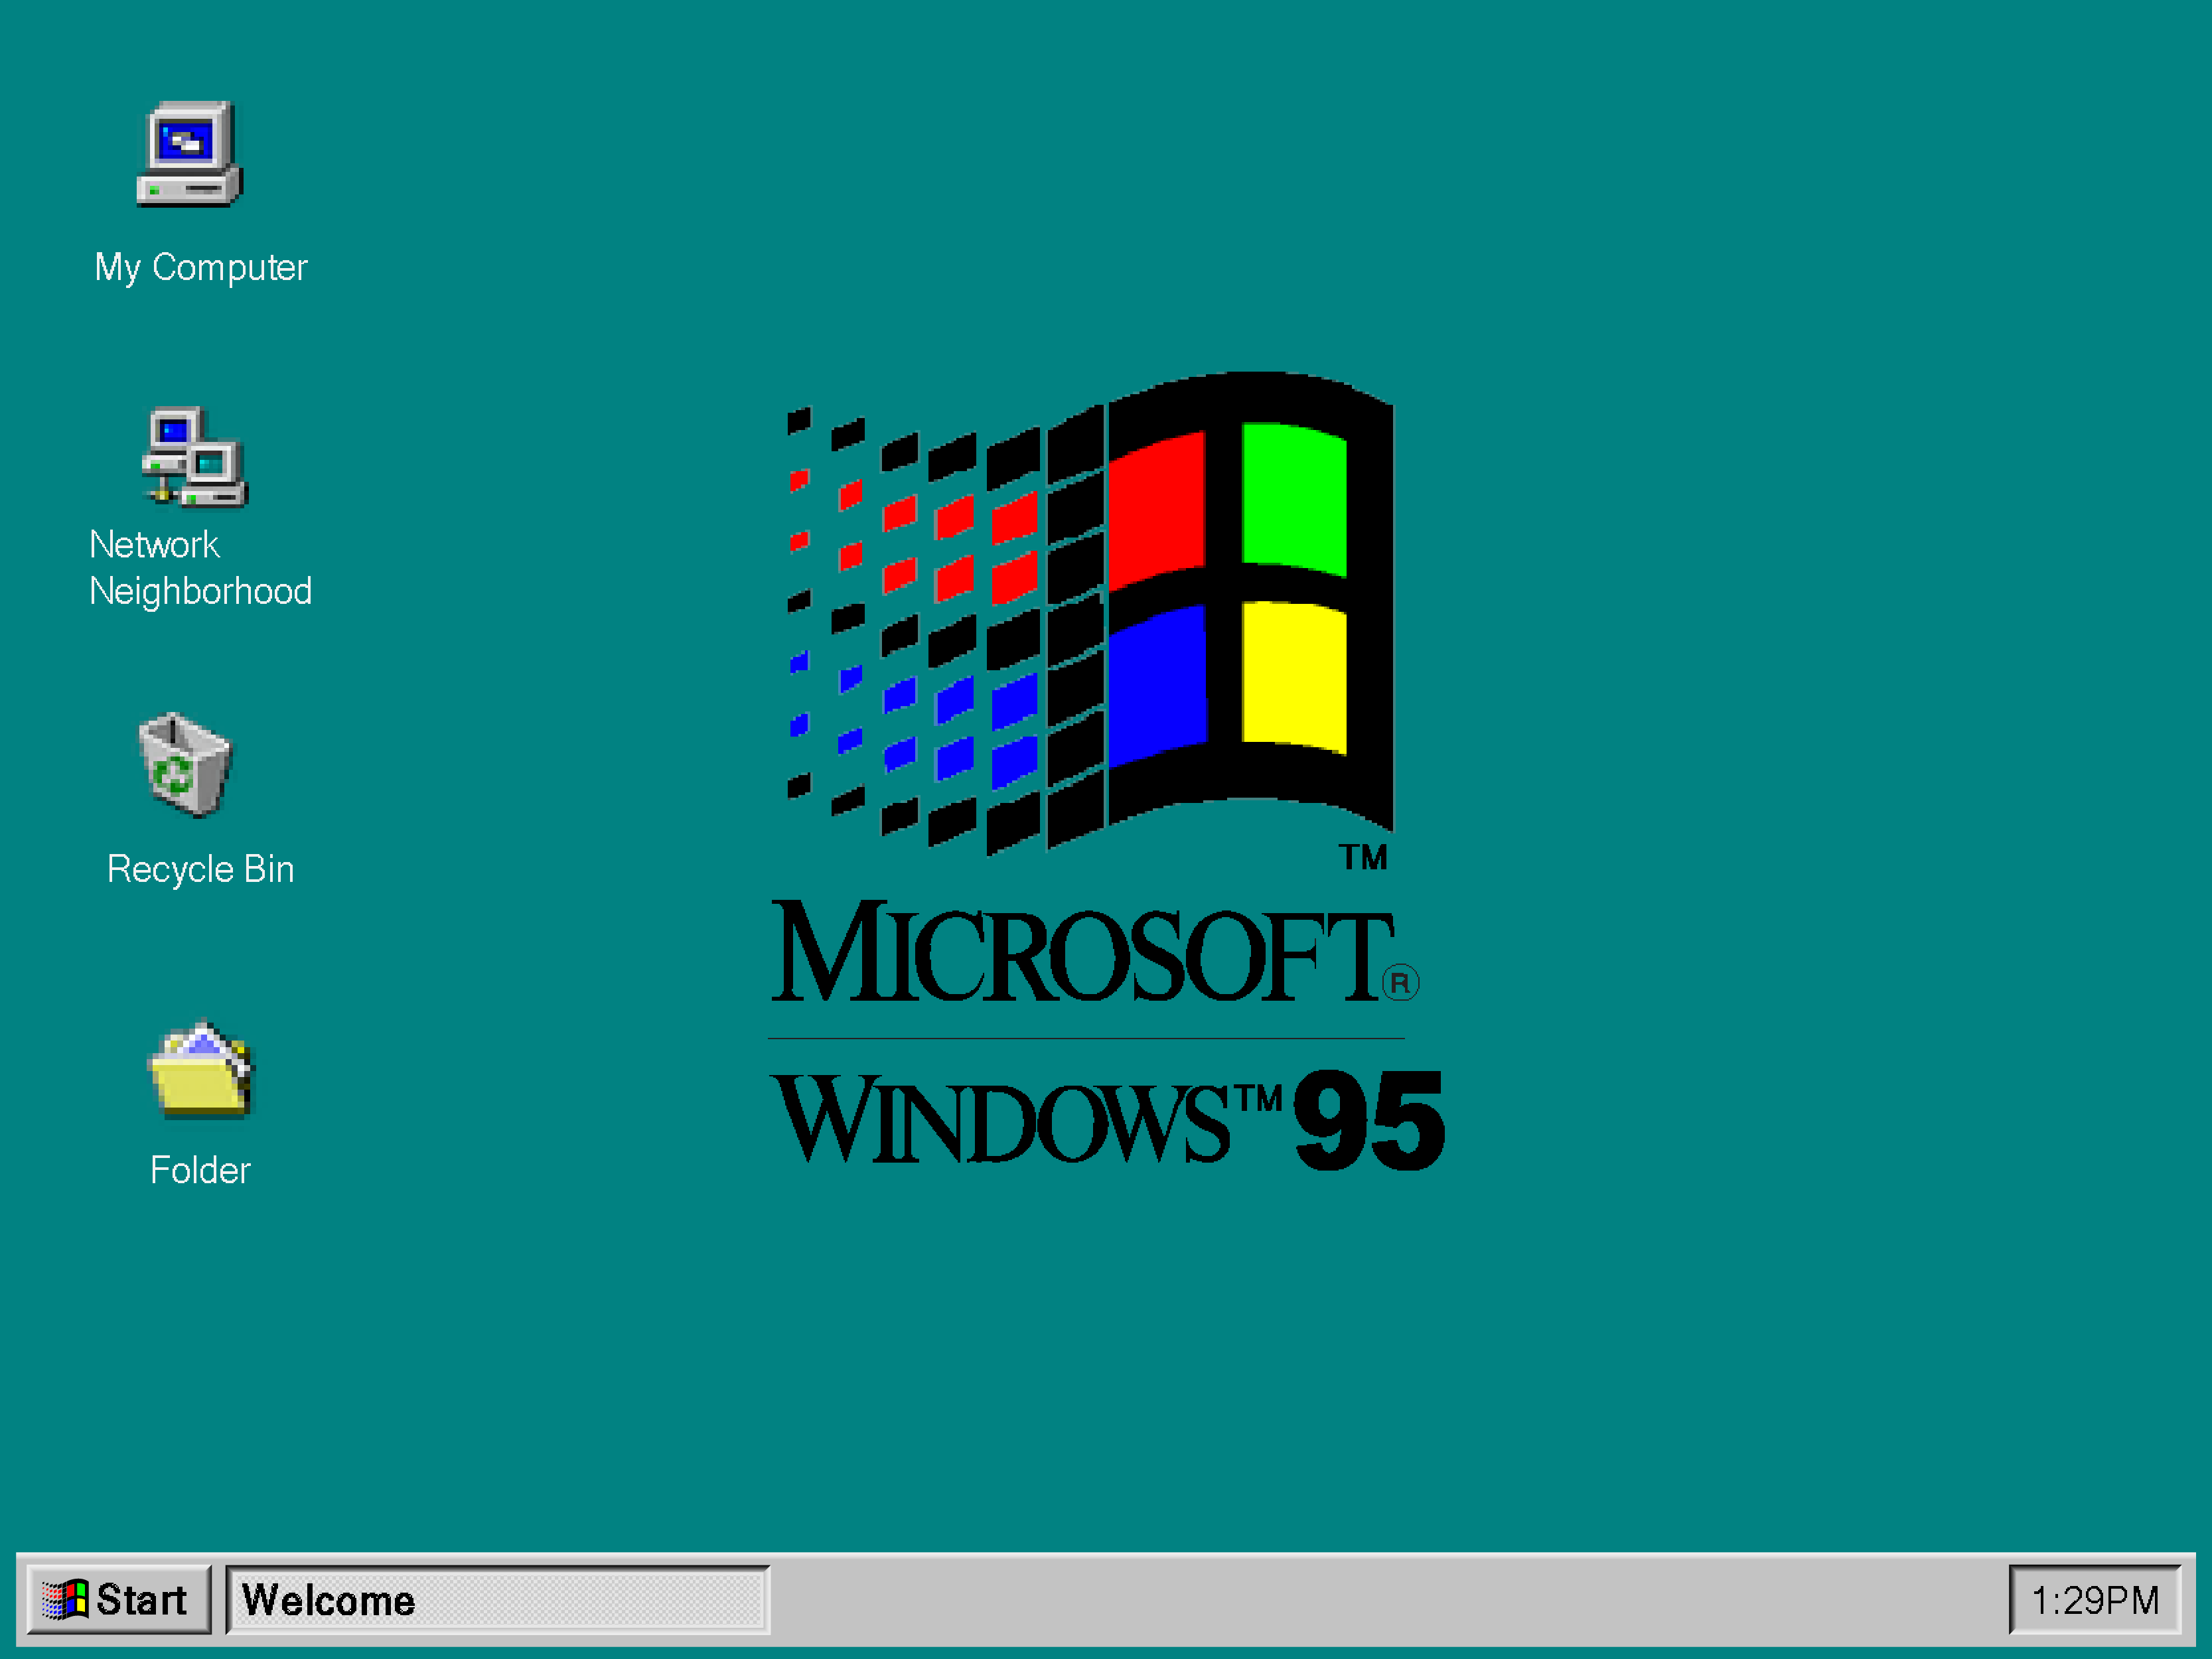 Microsoft windows operating system exe. Операционная система Windows 95. Windows 95 операционные системы Microsoft. Экран Windows 95. Windows 95 Интерфейс.